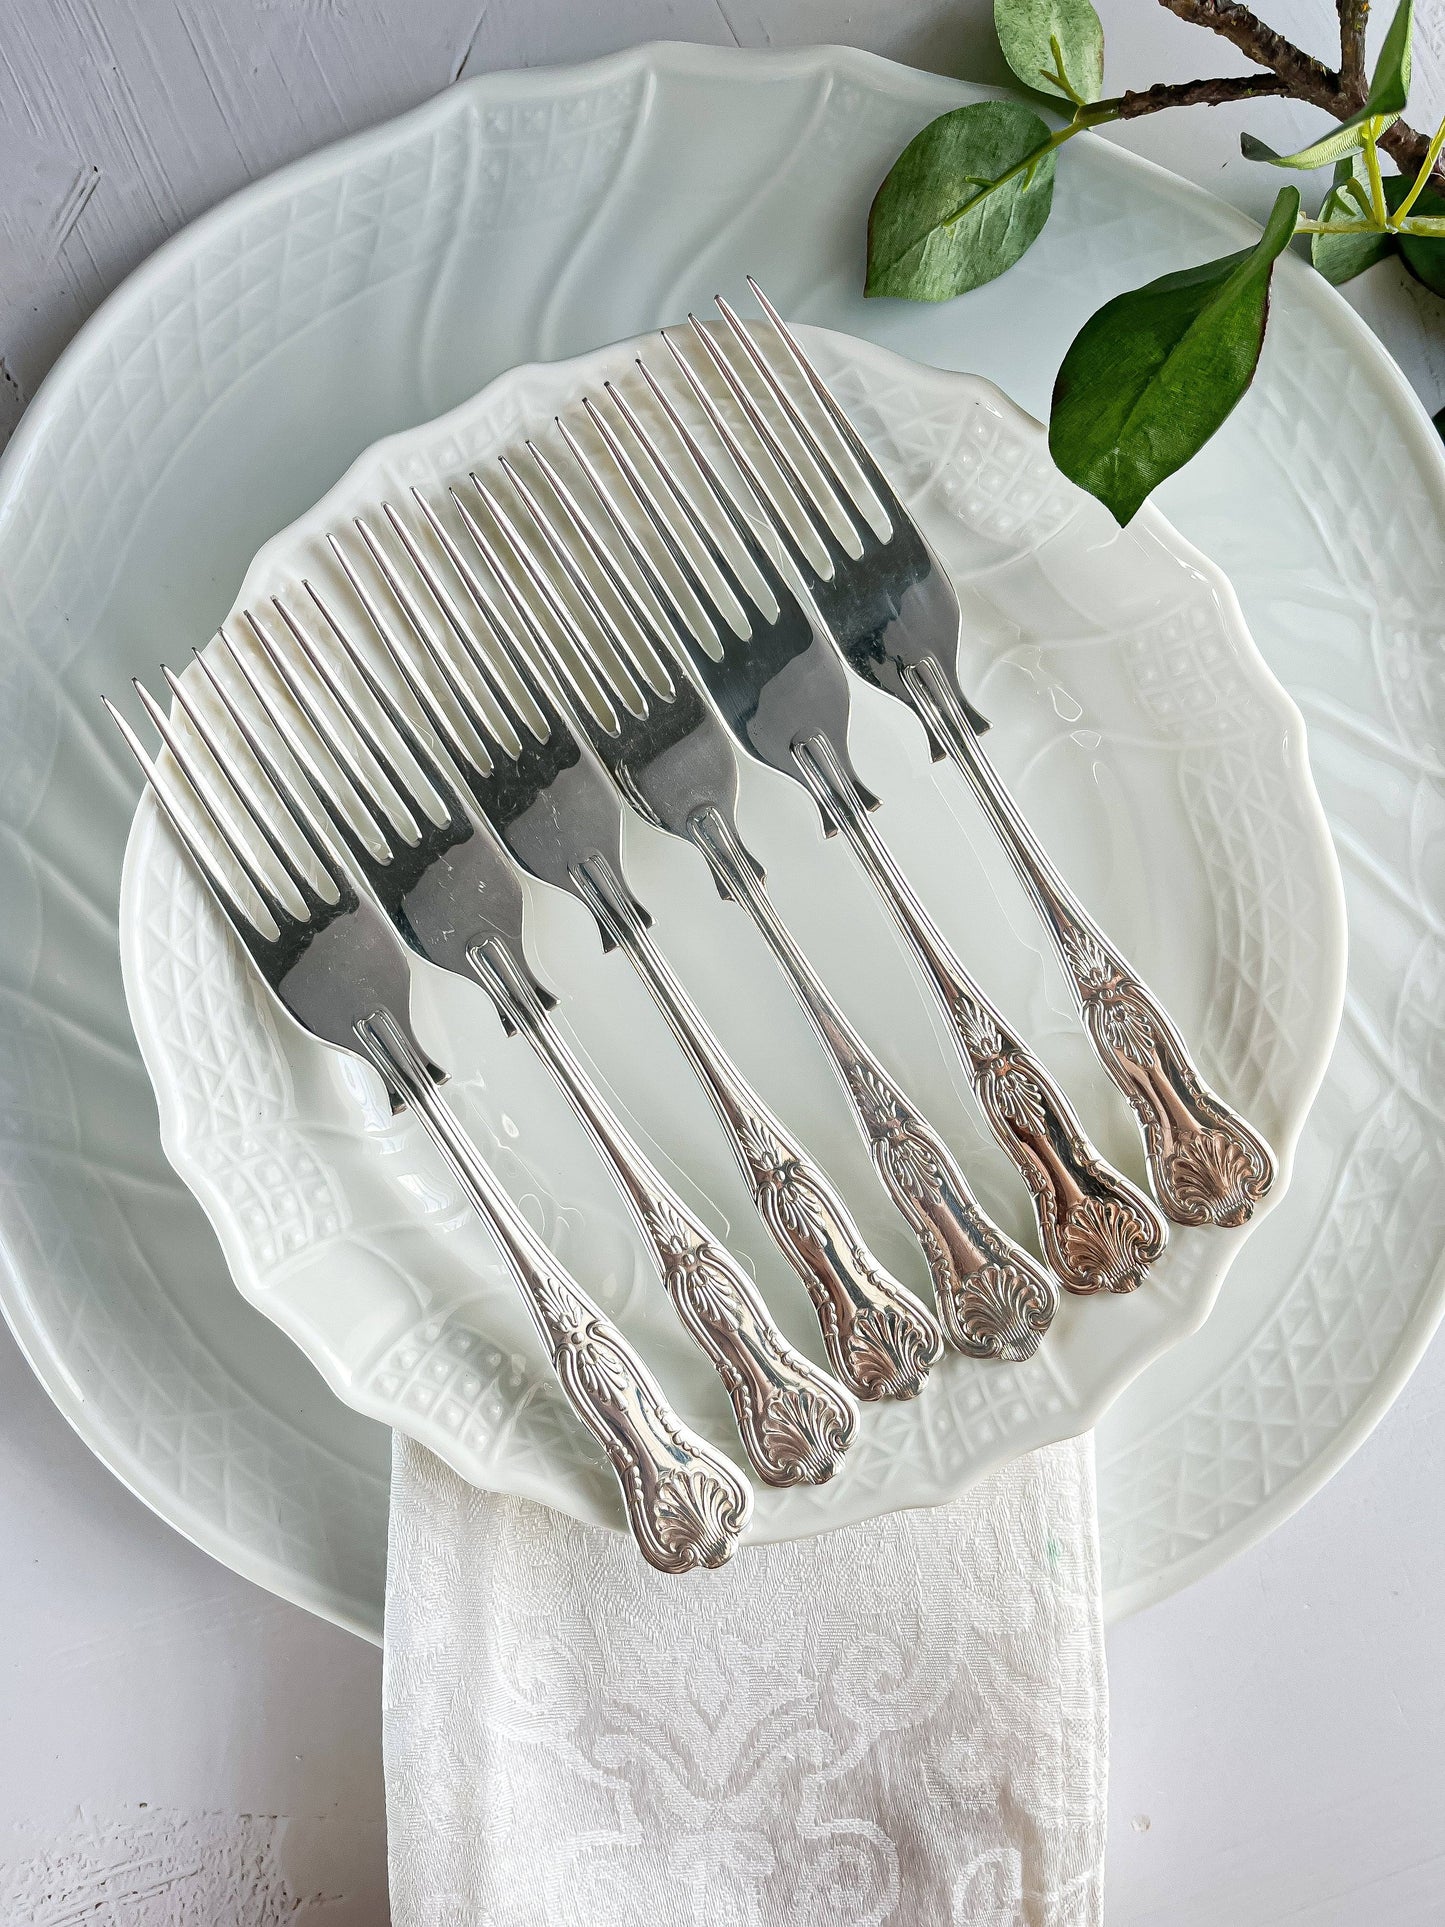 Sheffield Cutlery Co. Set of 6 Luncheon Forks - ‘Kings’ Pattern - SOSC Home